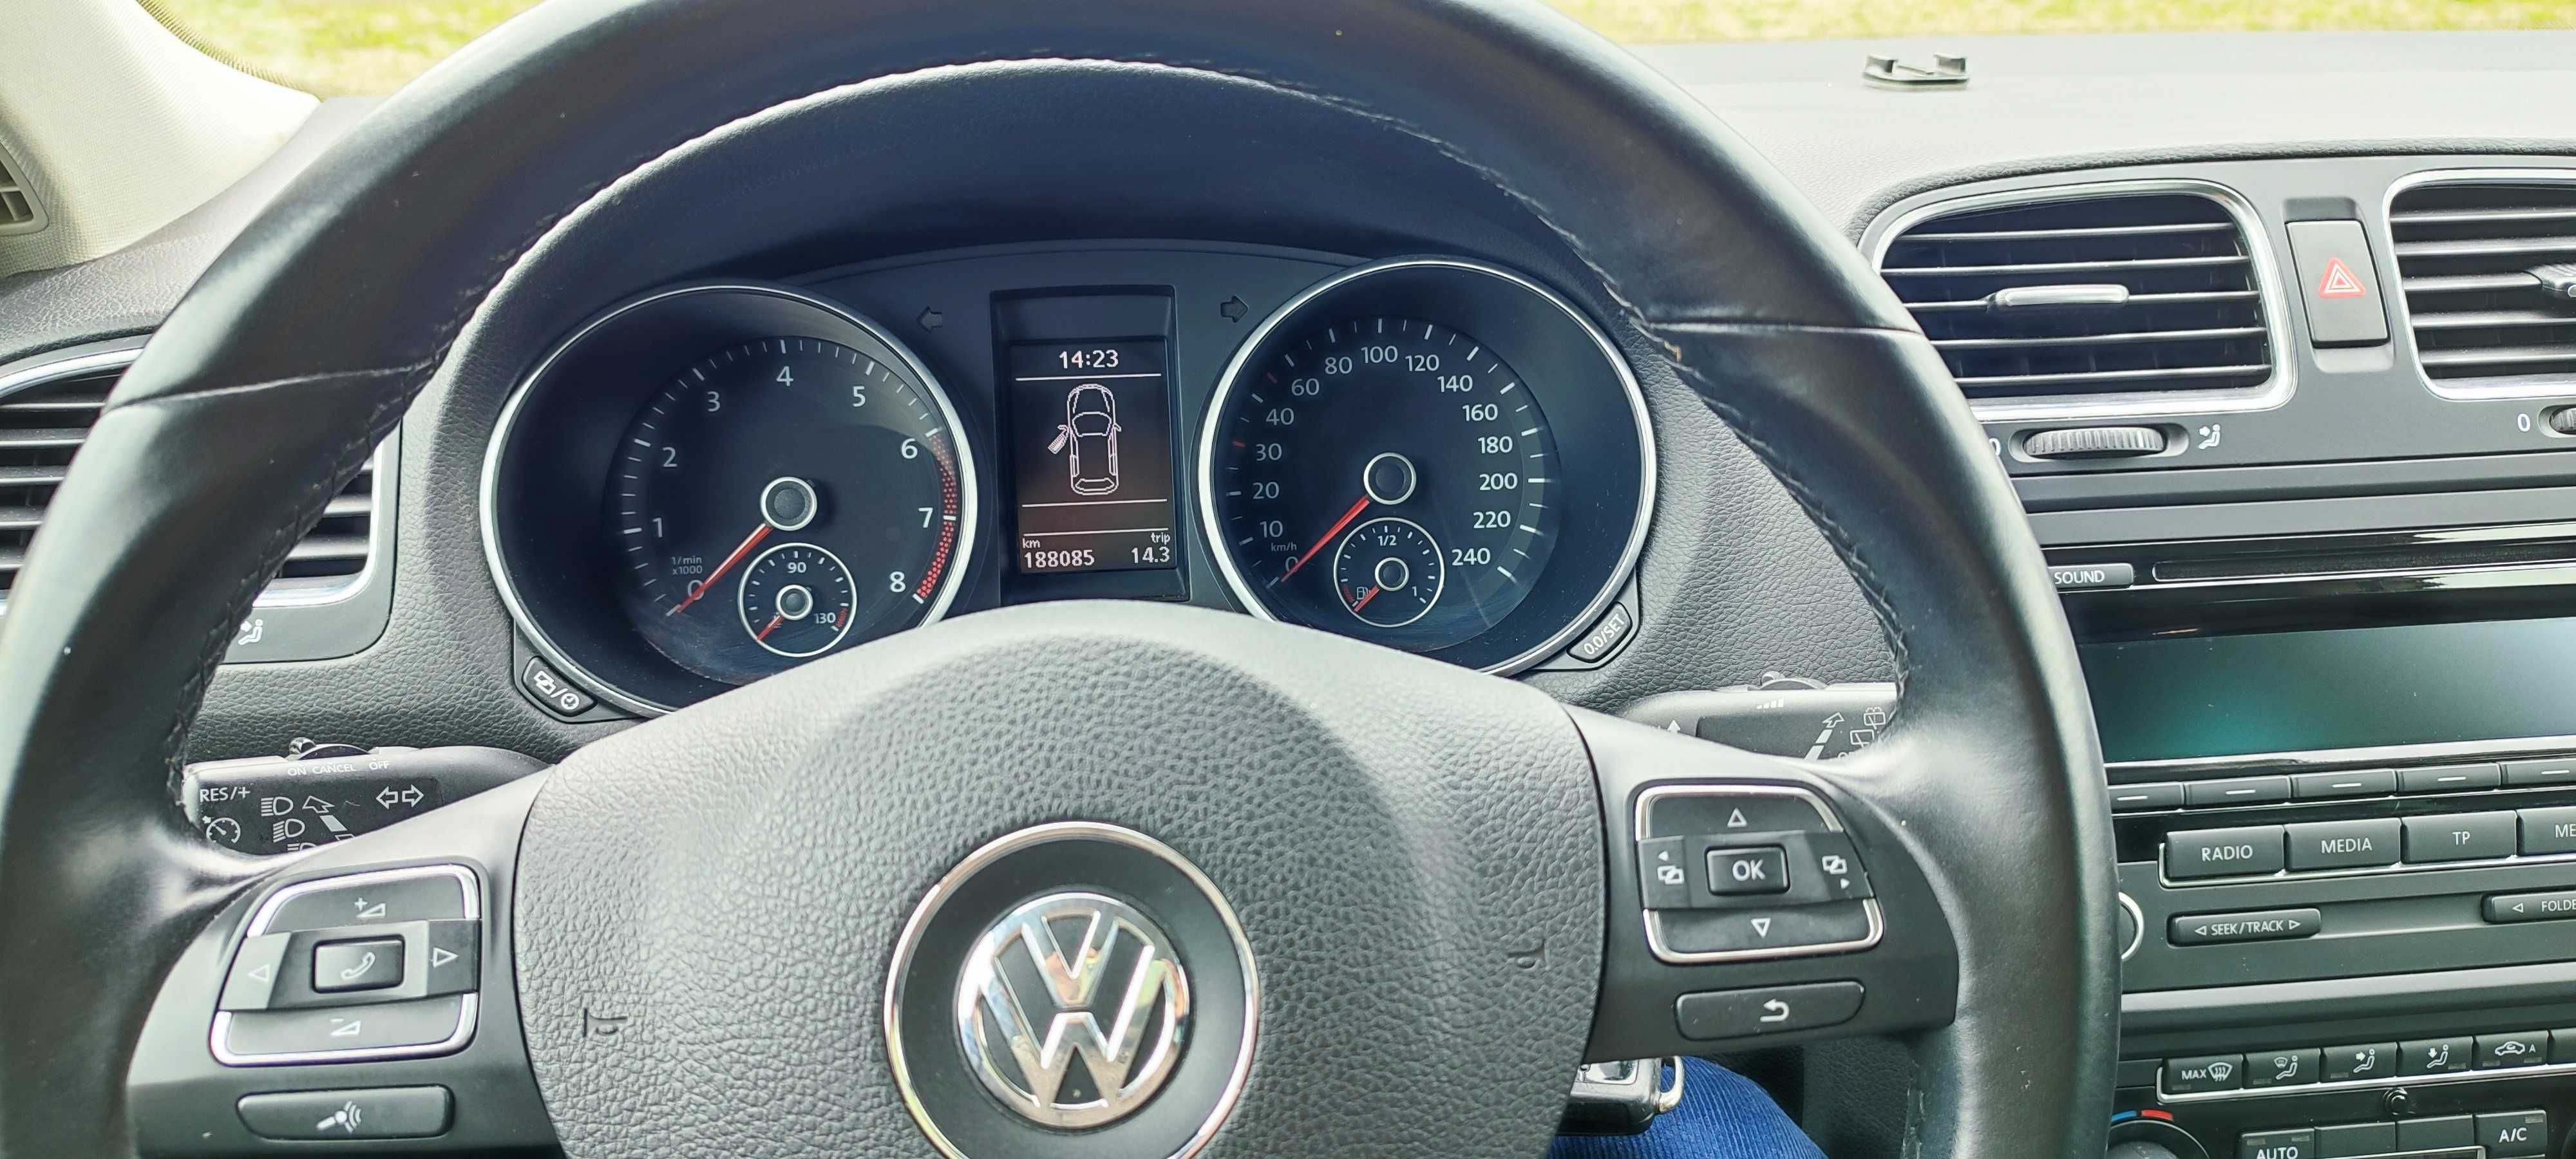 Volkswagen Golf VI 1,4 TSI benzyna